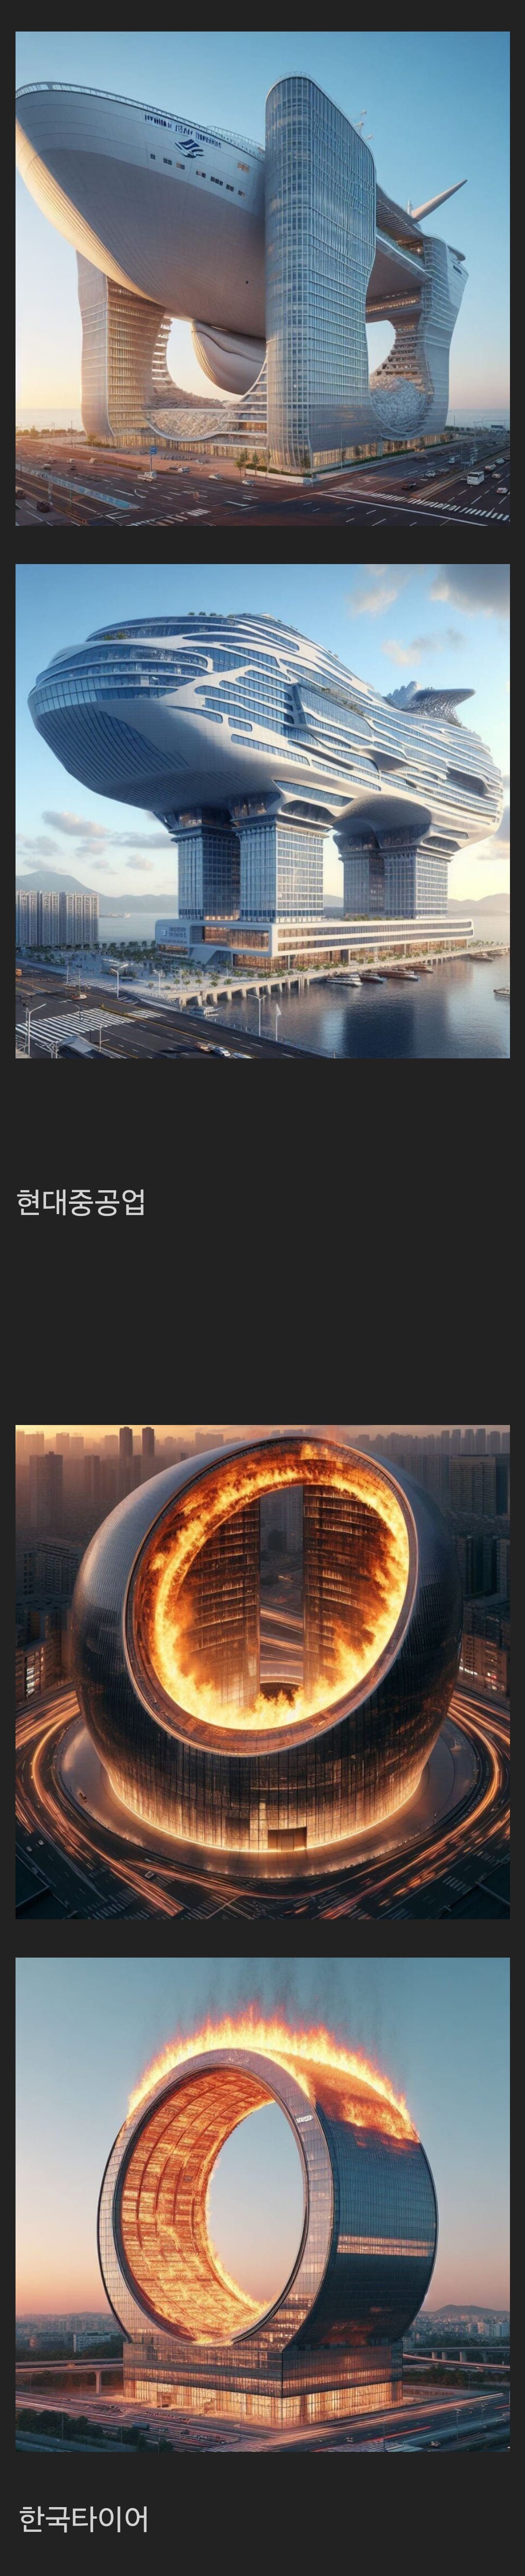 Ai가 상상해본 한국대기업의 본사 건물